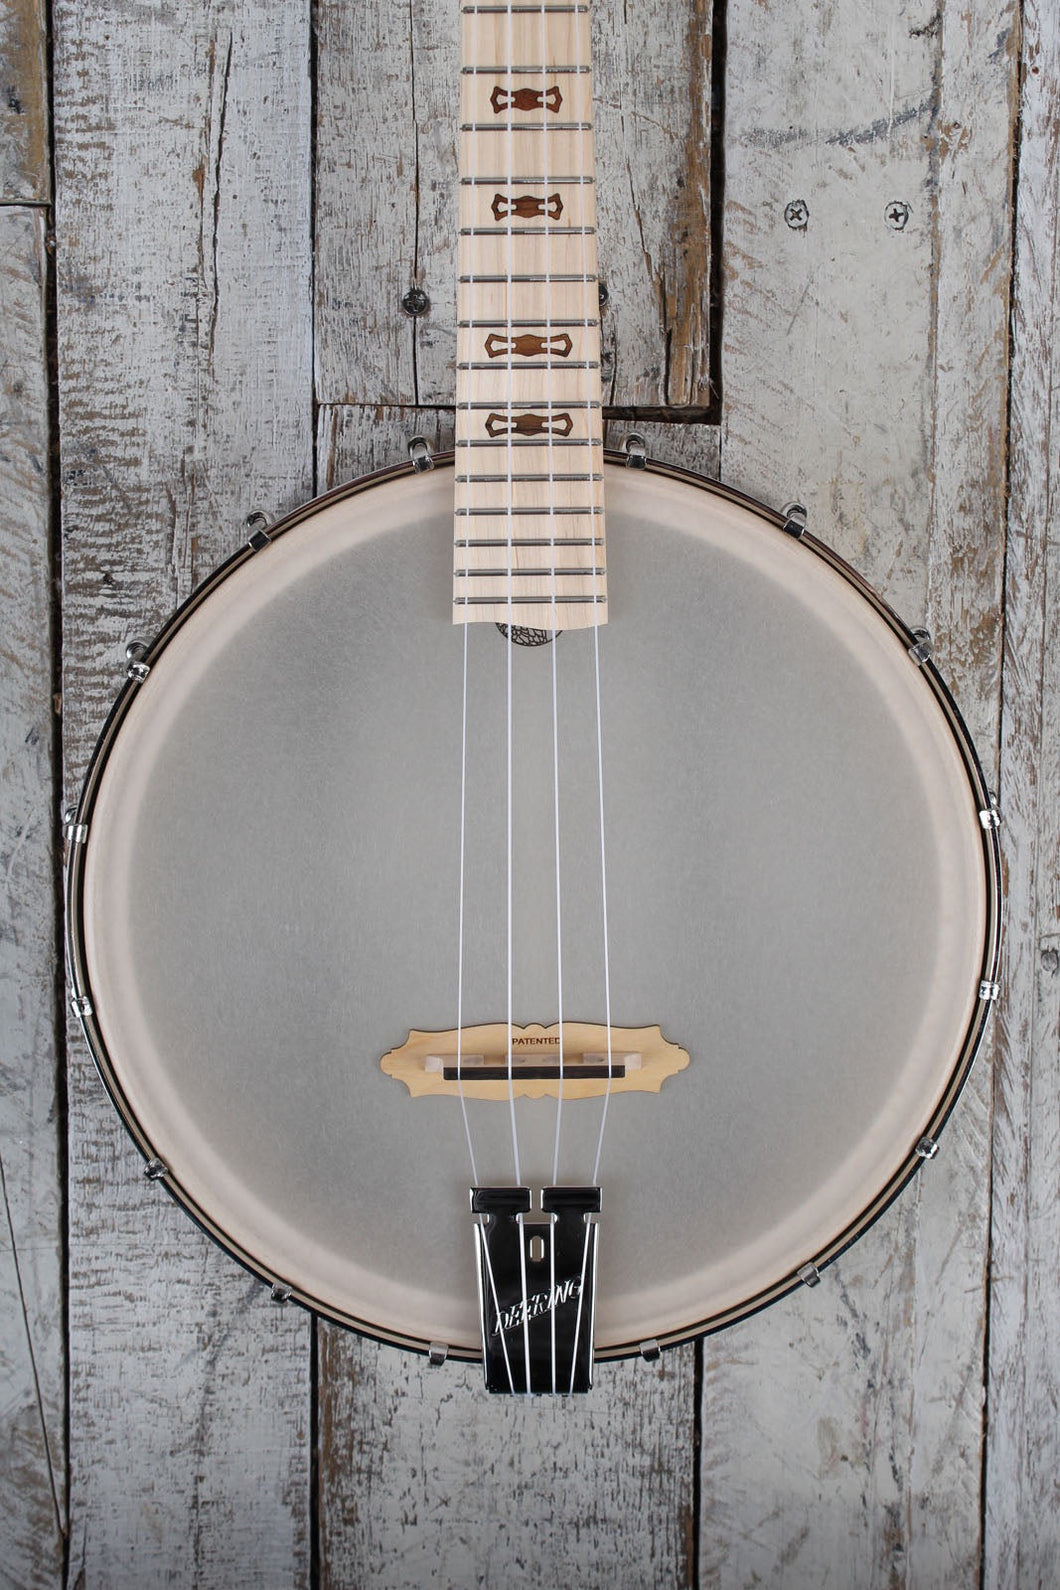 Deering Goodtime Banjo Ukulele Concert Scale Banjolele Uke Made in the USA